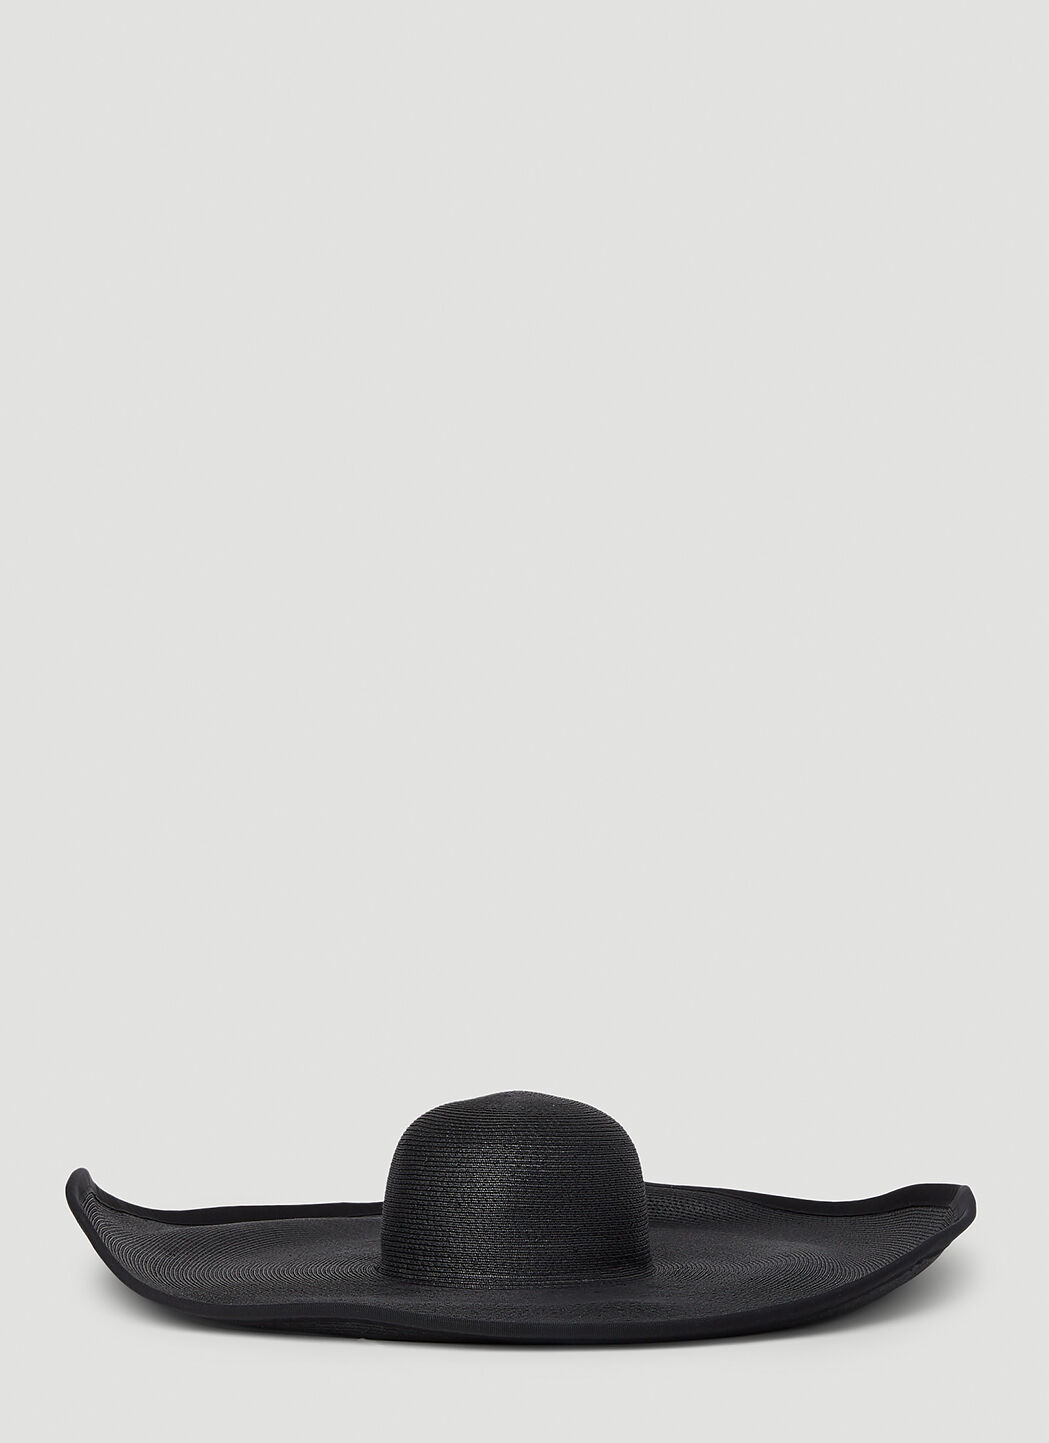 Max Mara Oversized Hat Black max0252004